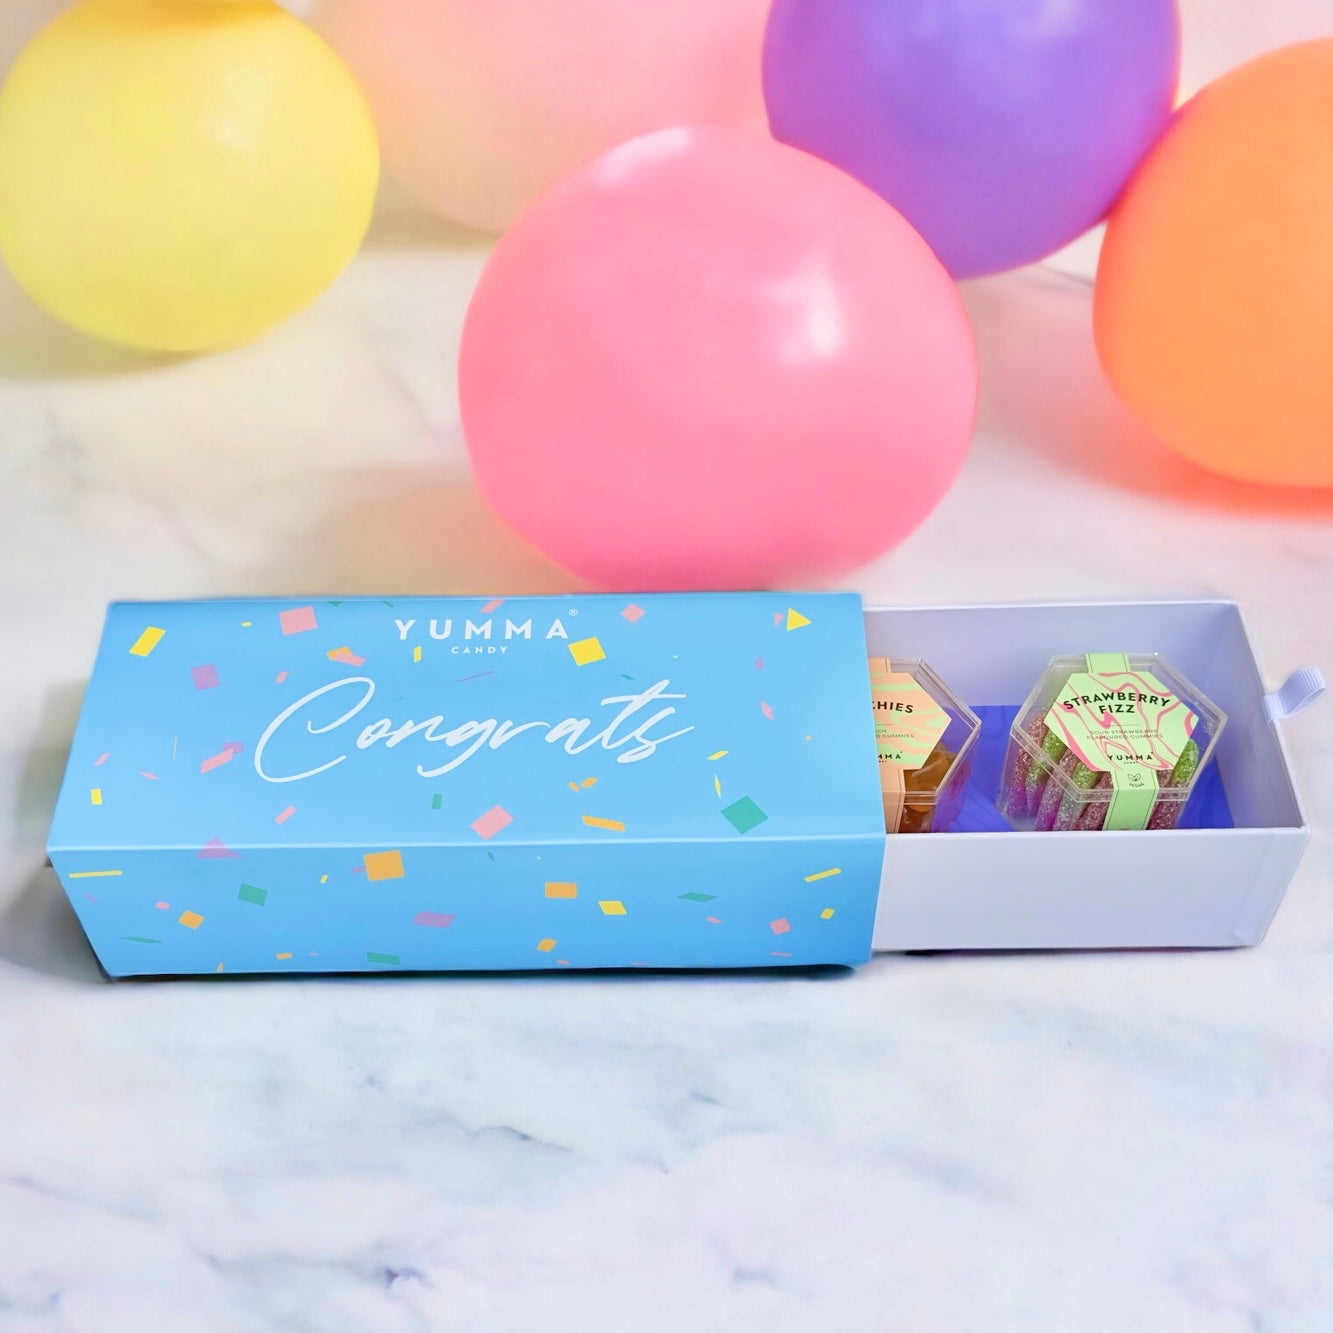 Yumma Candy Gift Set - Congrats